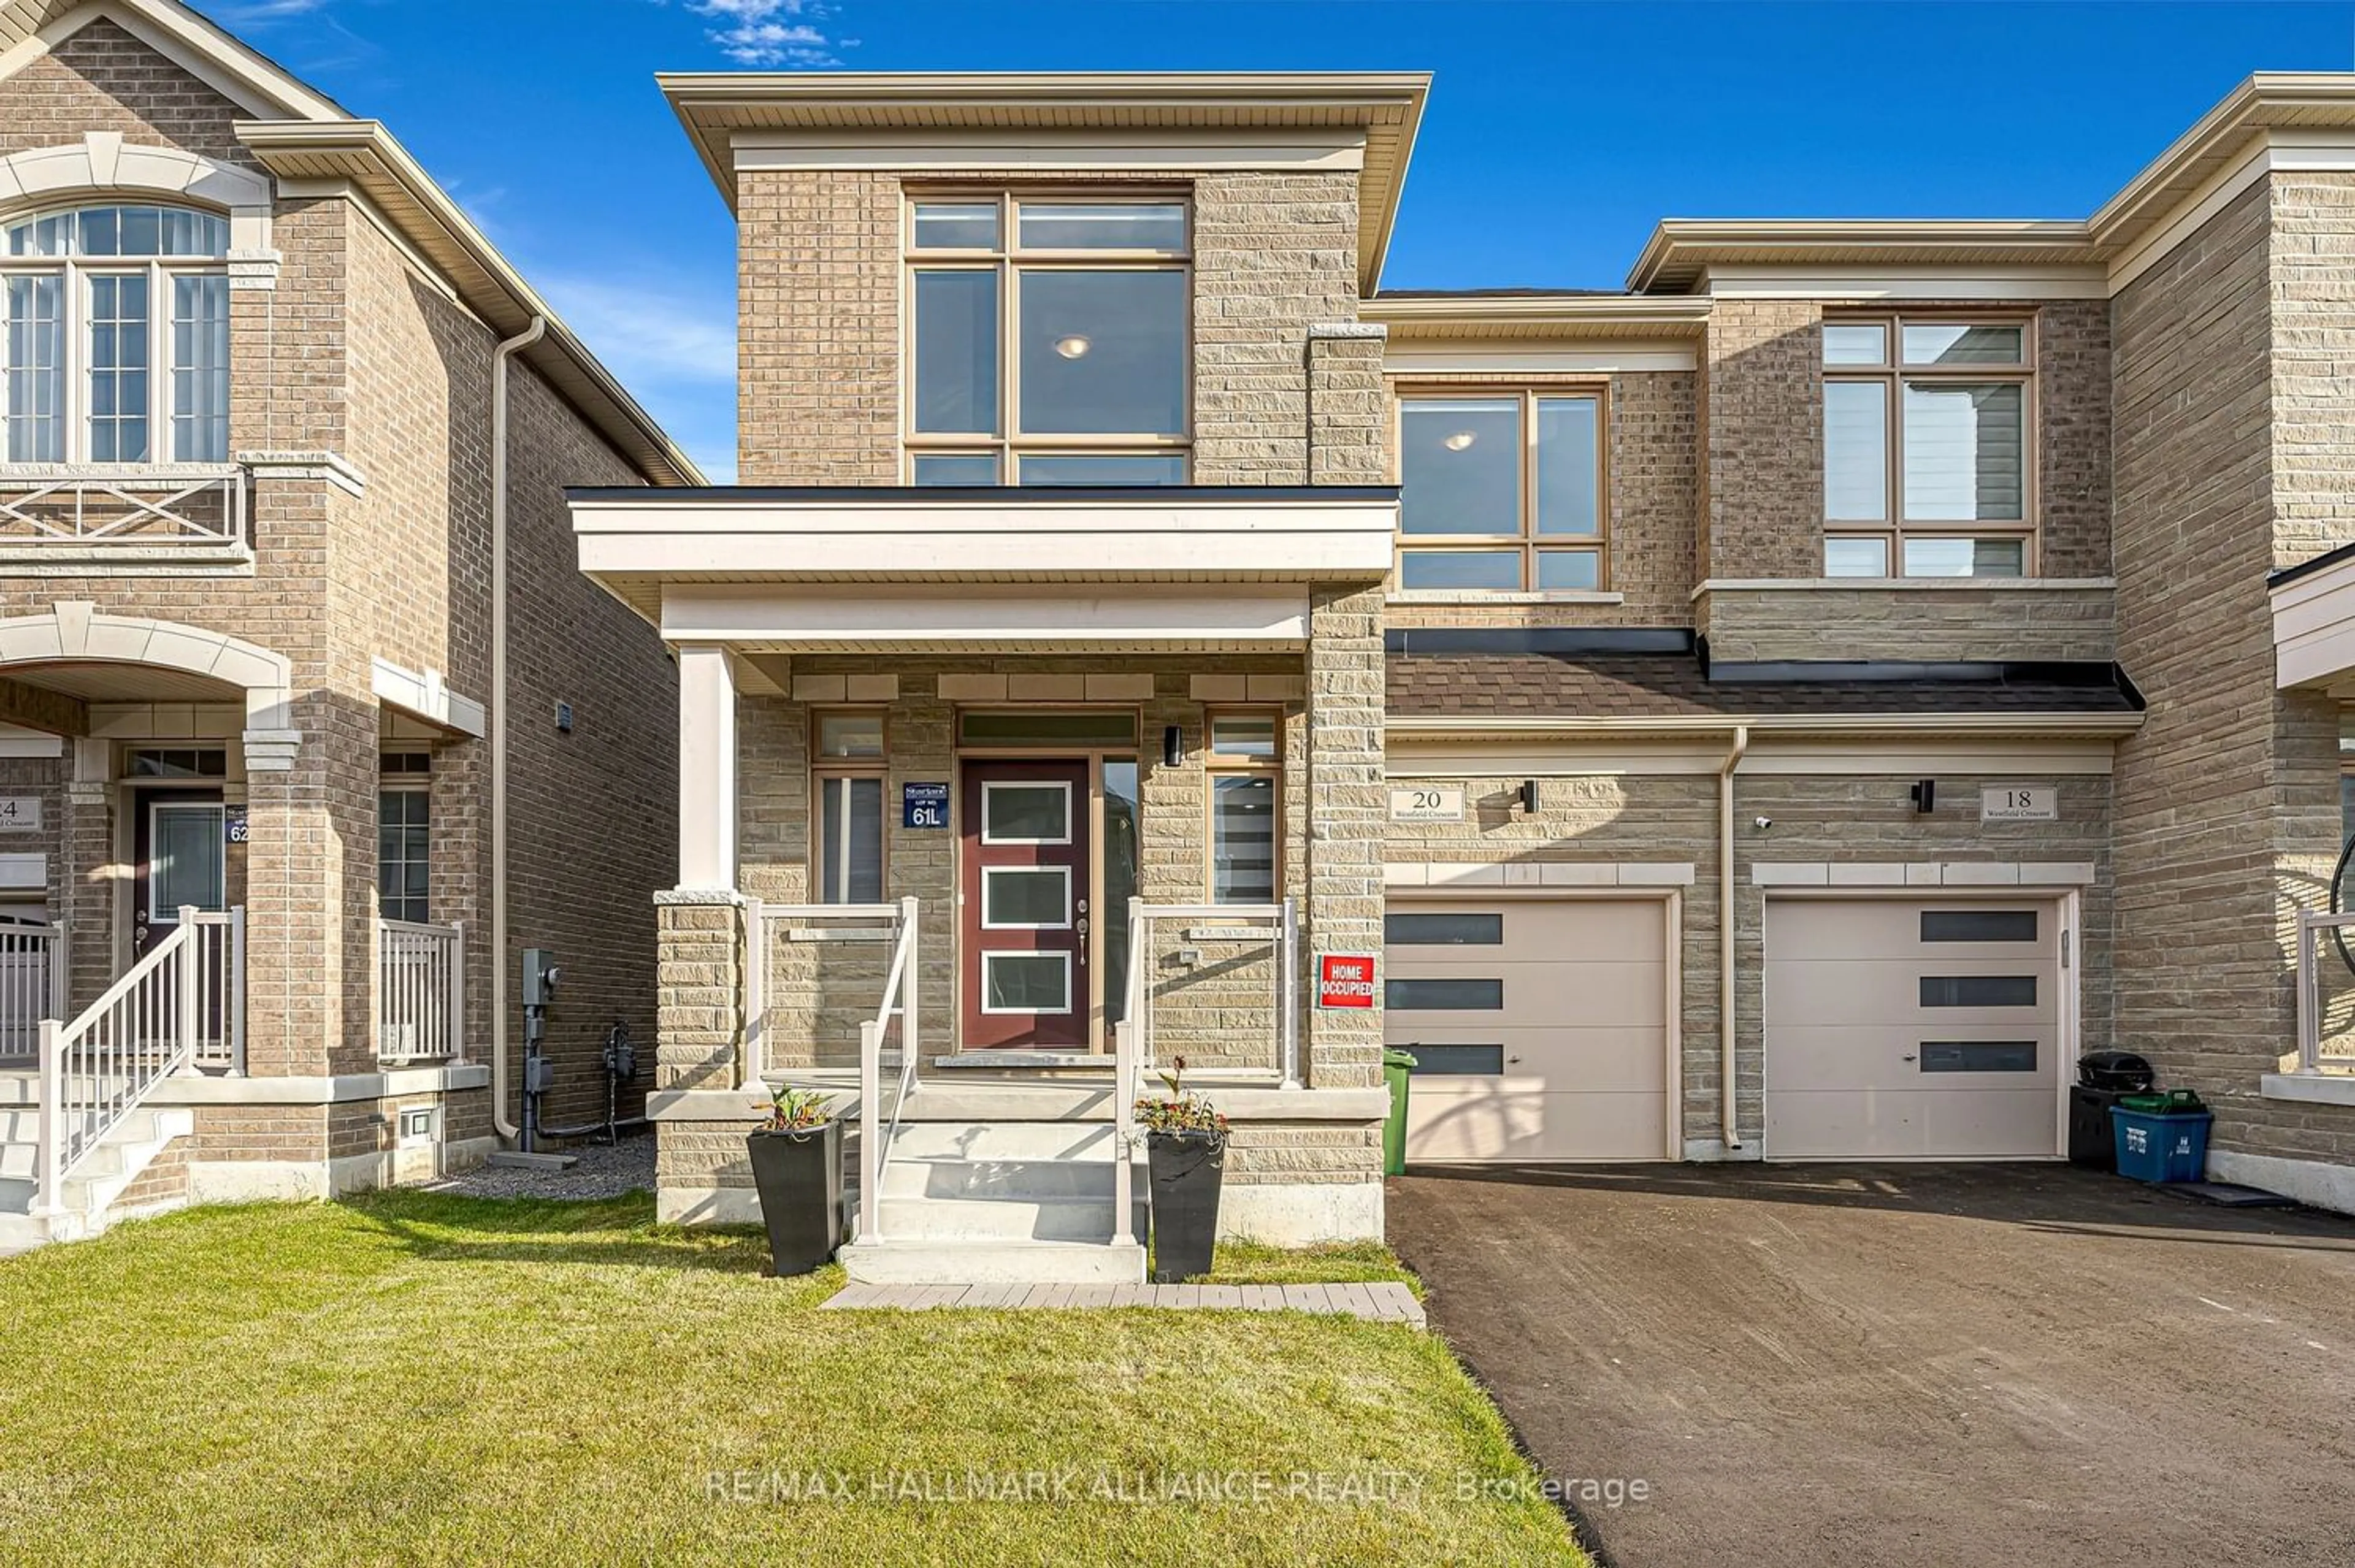 Home with brick exterior material for 20 Westfield Cres, Hamilton Ontario L8B 1Y1